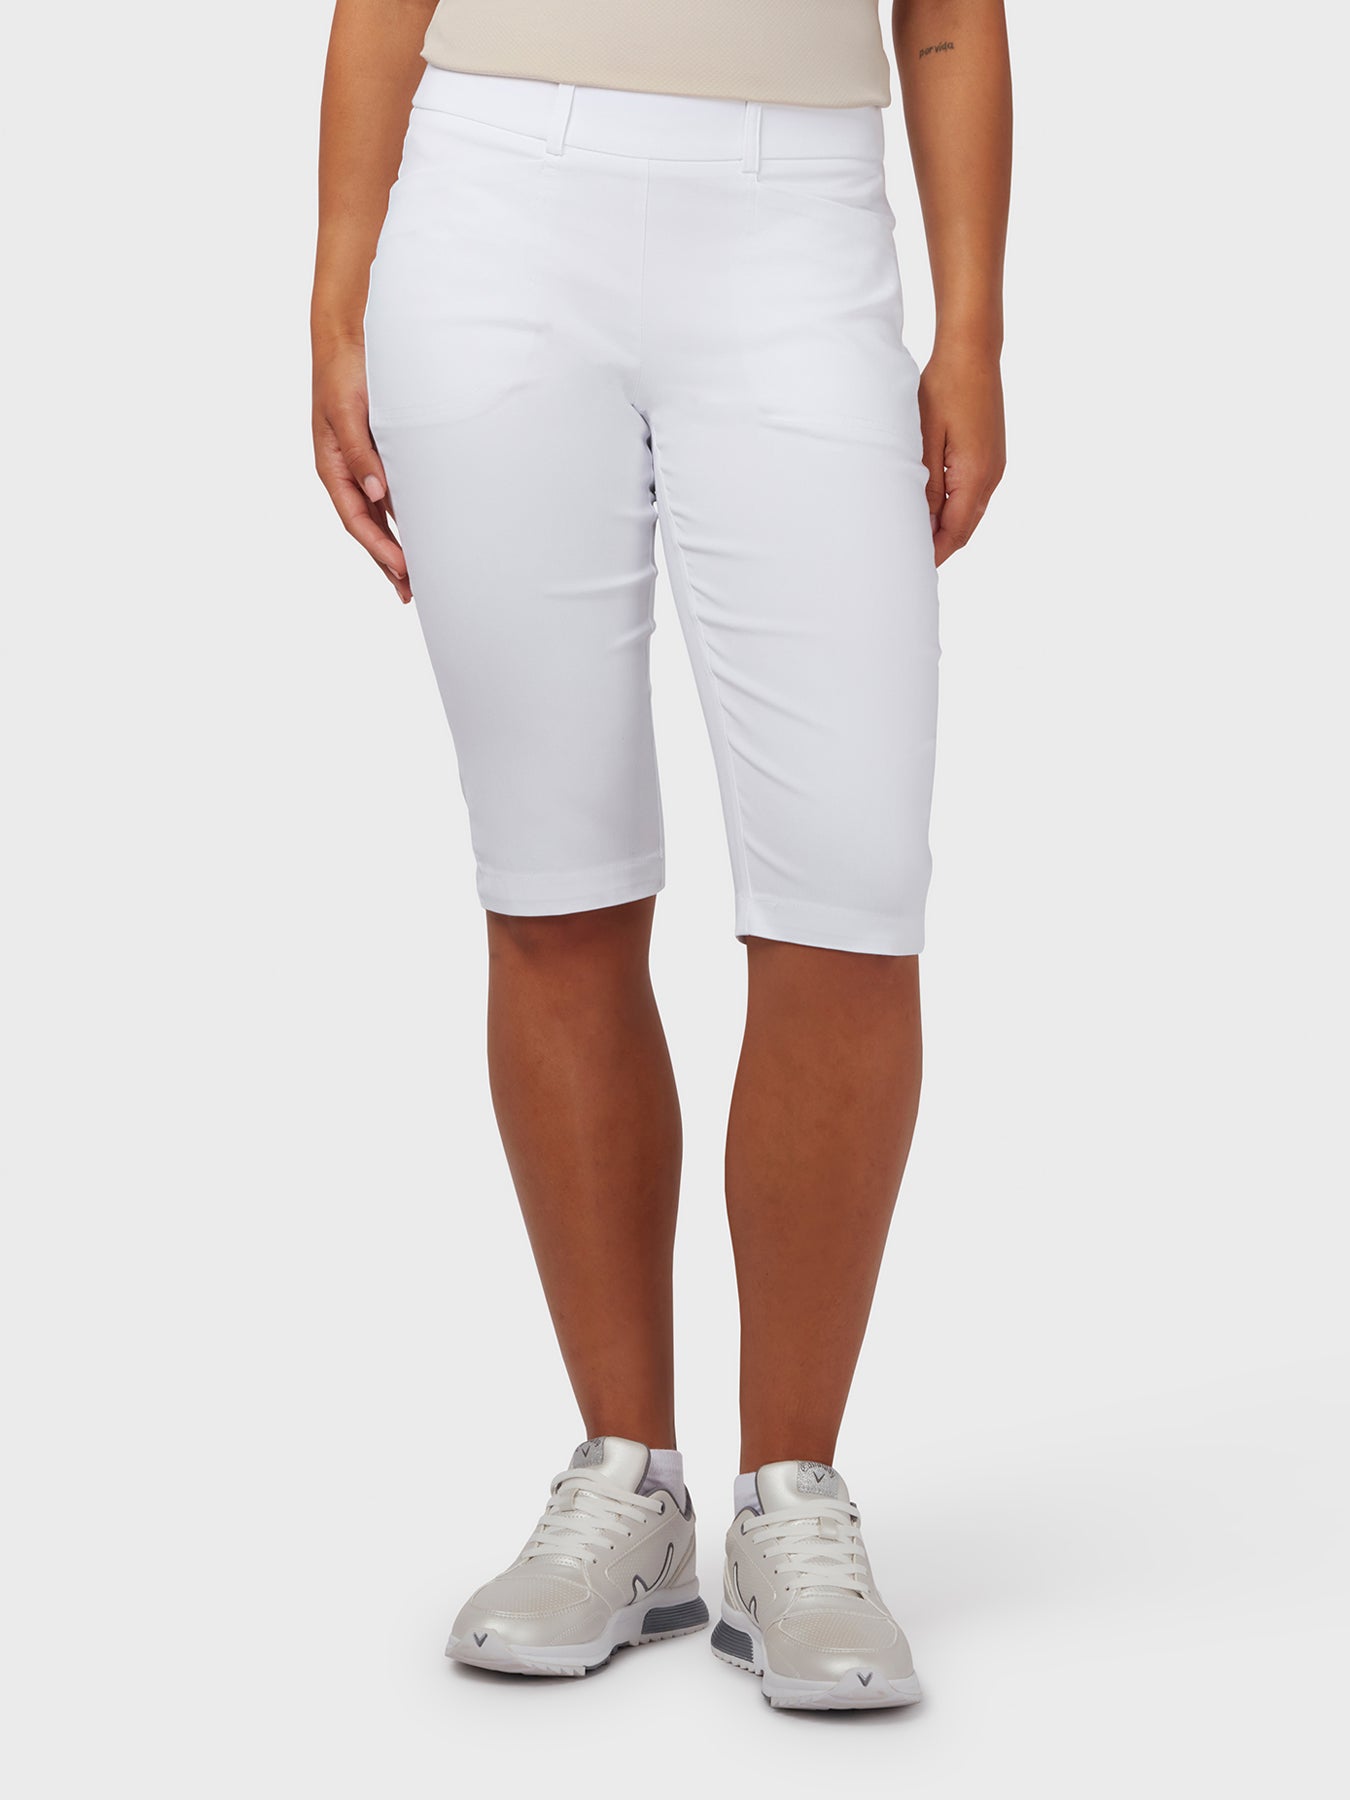 View 34 Truesculpt Womens Shorts In Brilliant White Brilliant White M information